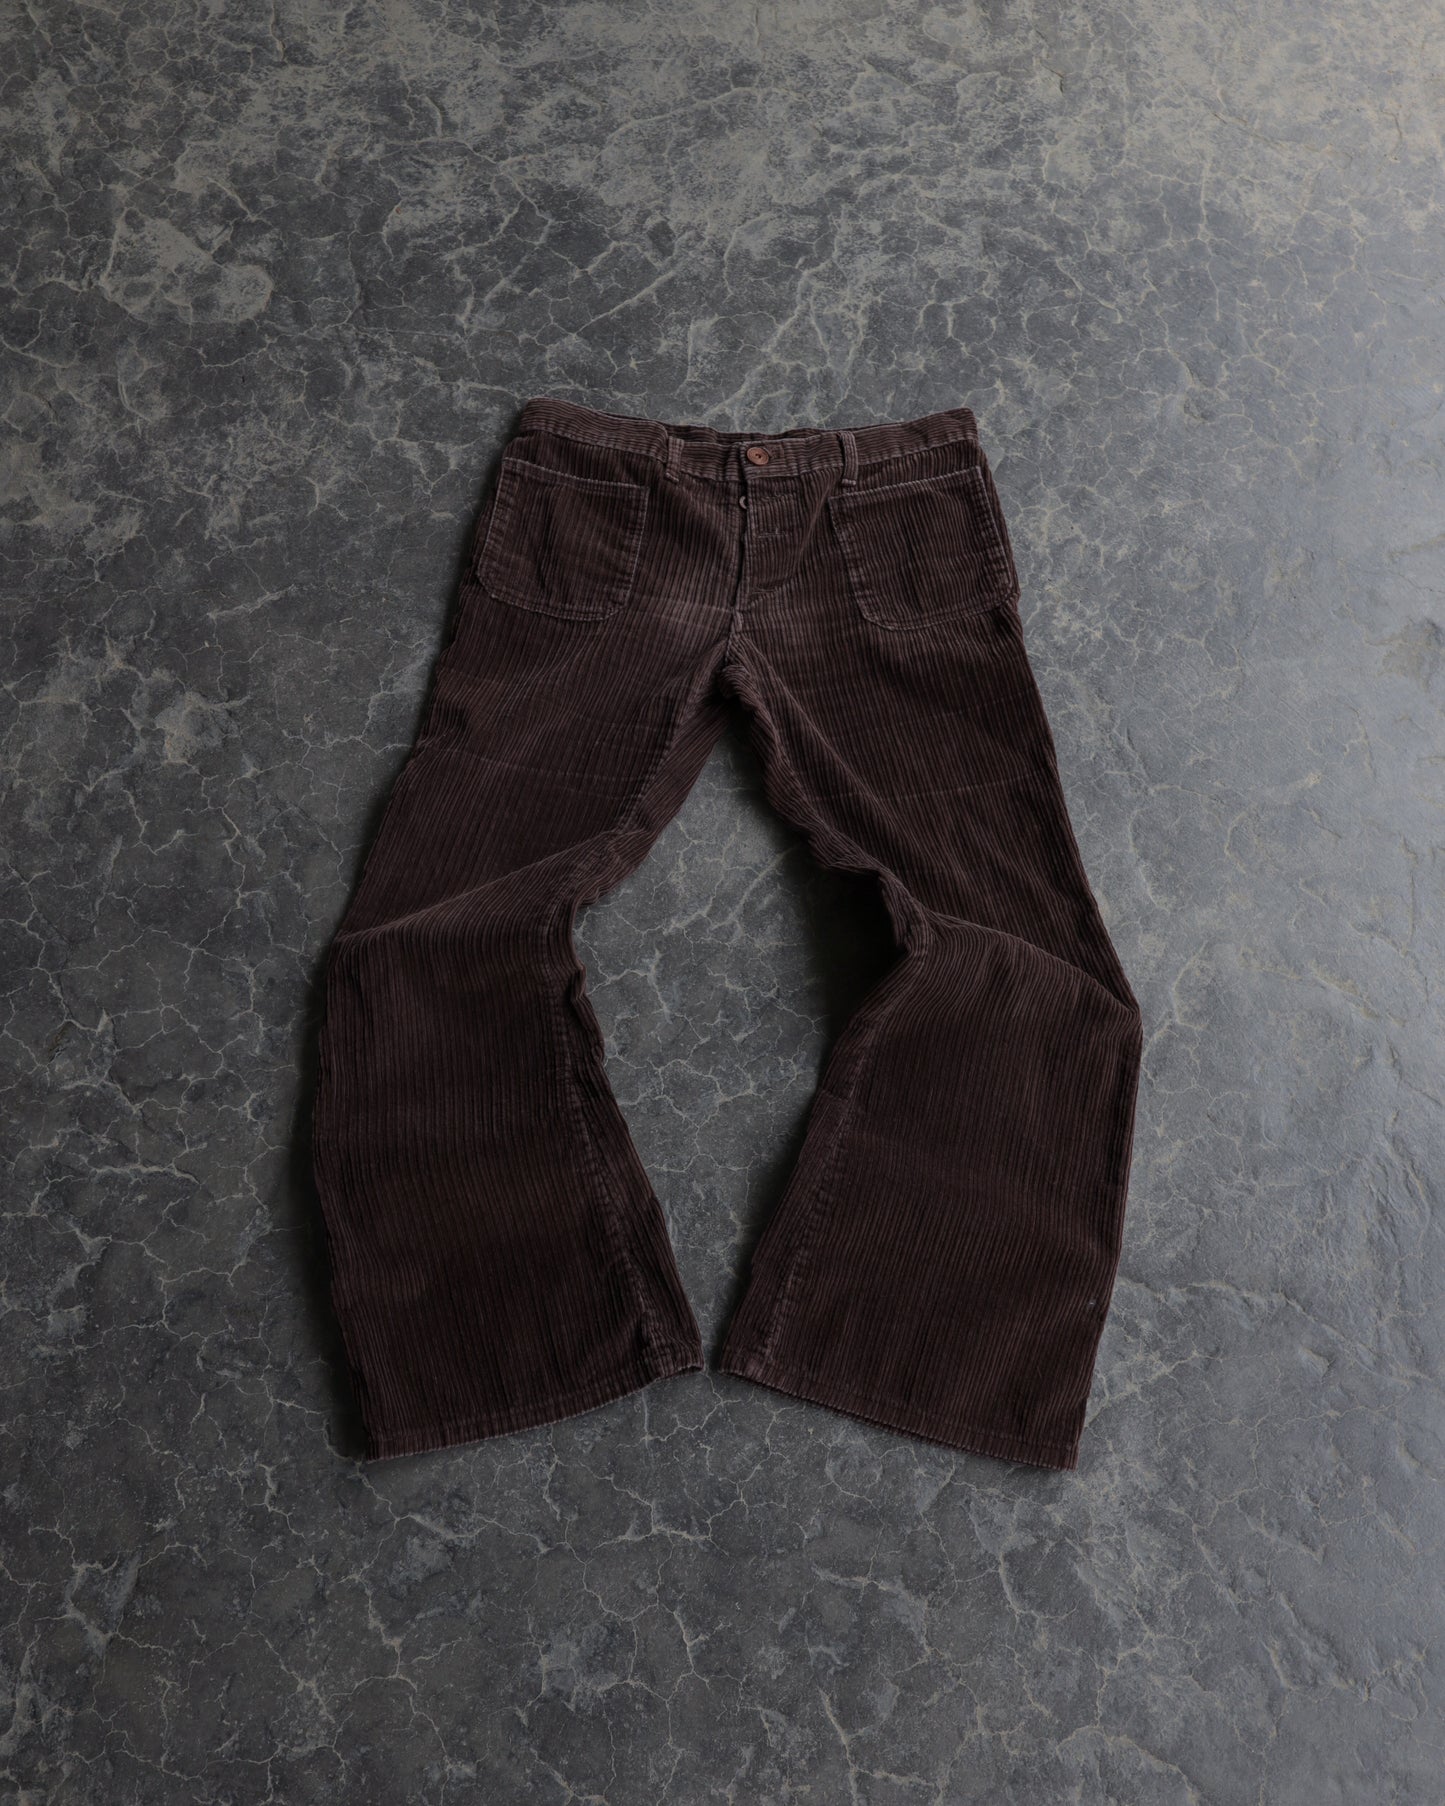 70s Brown Corduroy Flare Slacks Pants - M